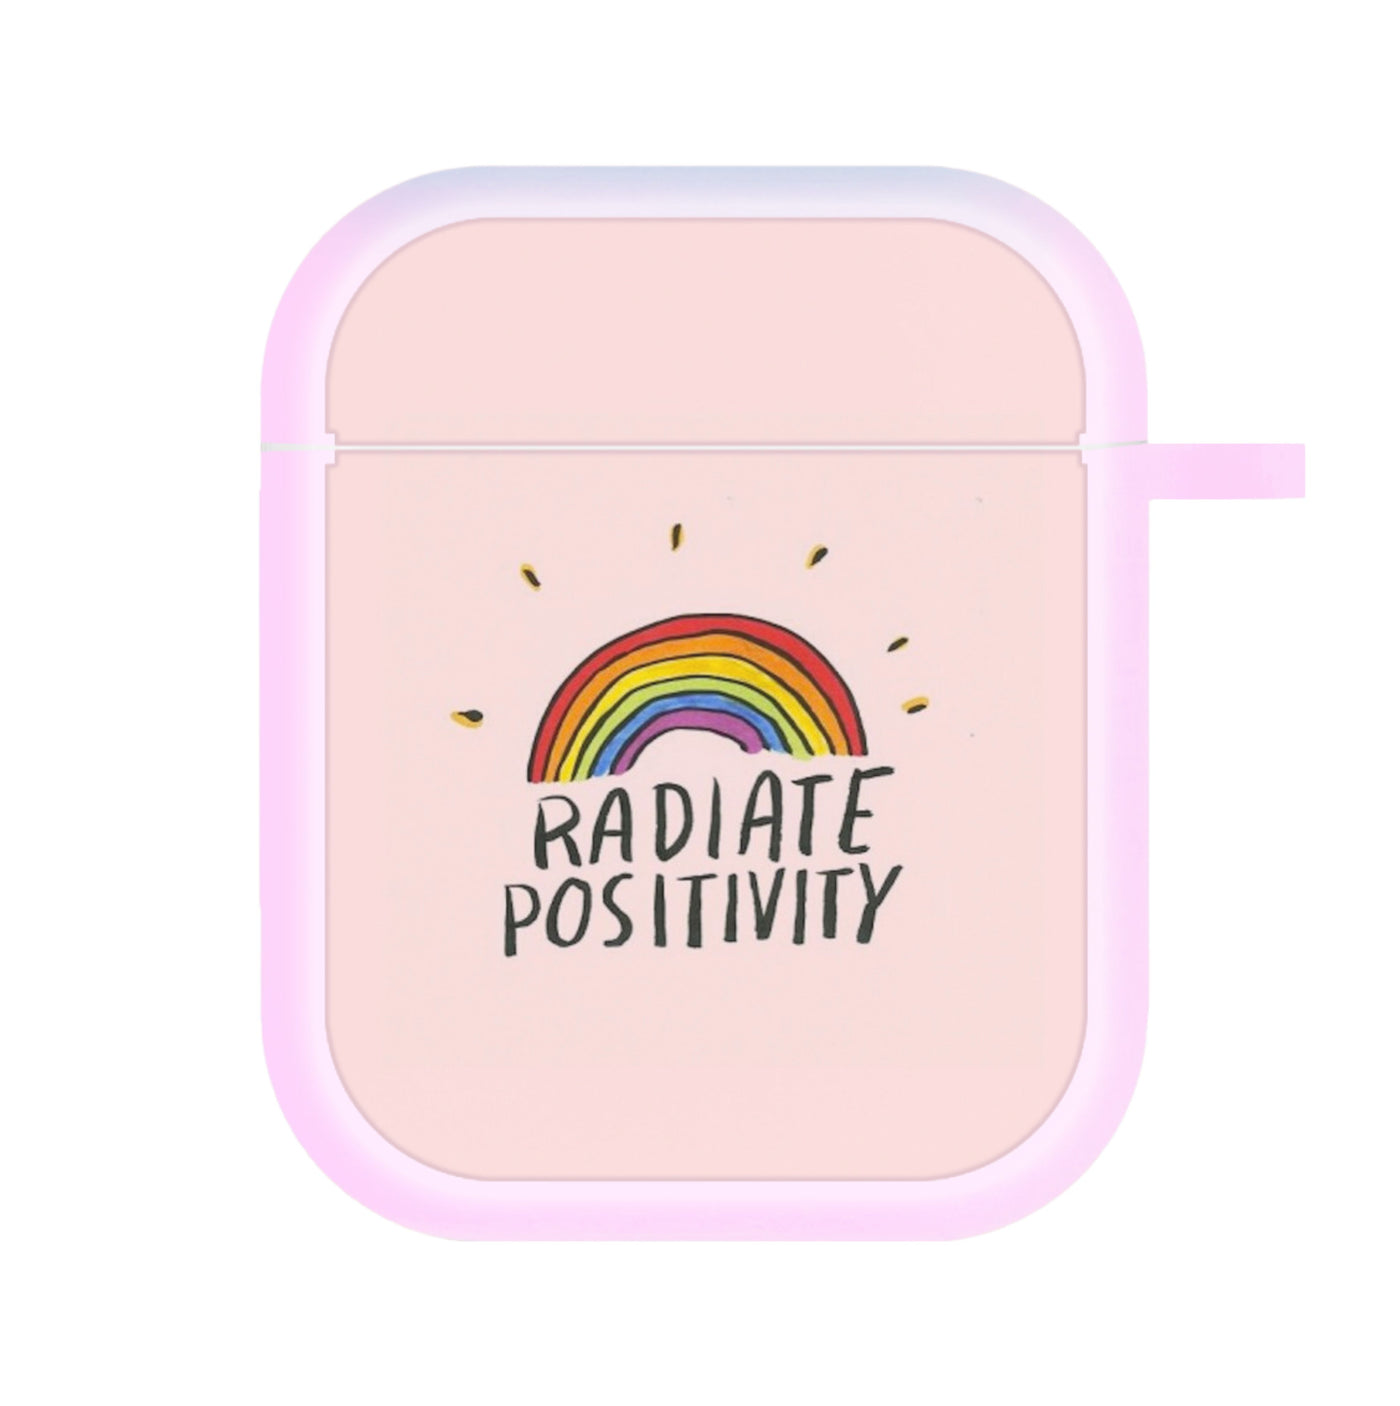 Radiate Positivity Rainbow - Positivity AirPods Case